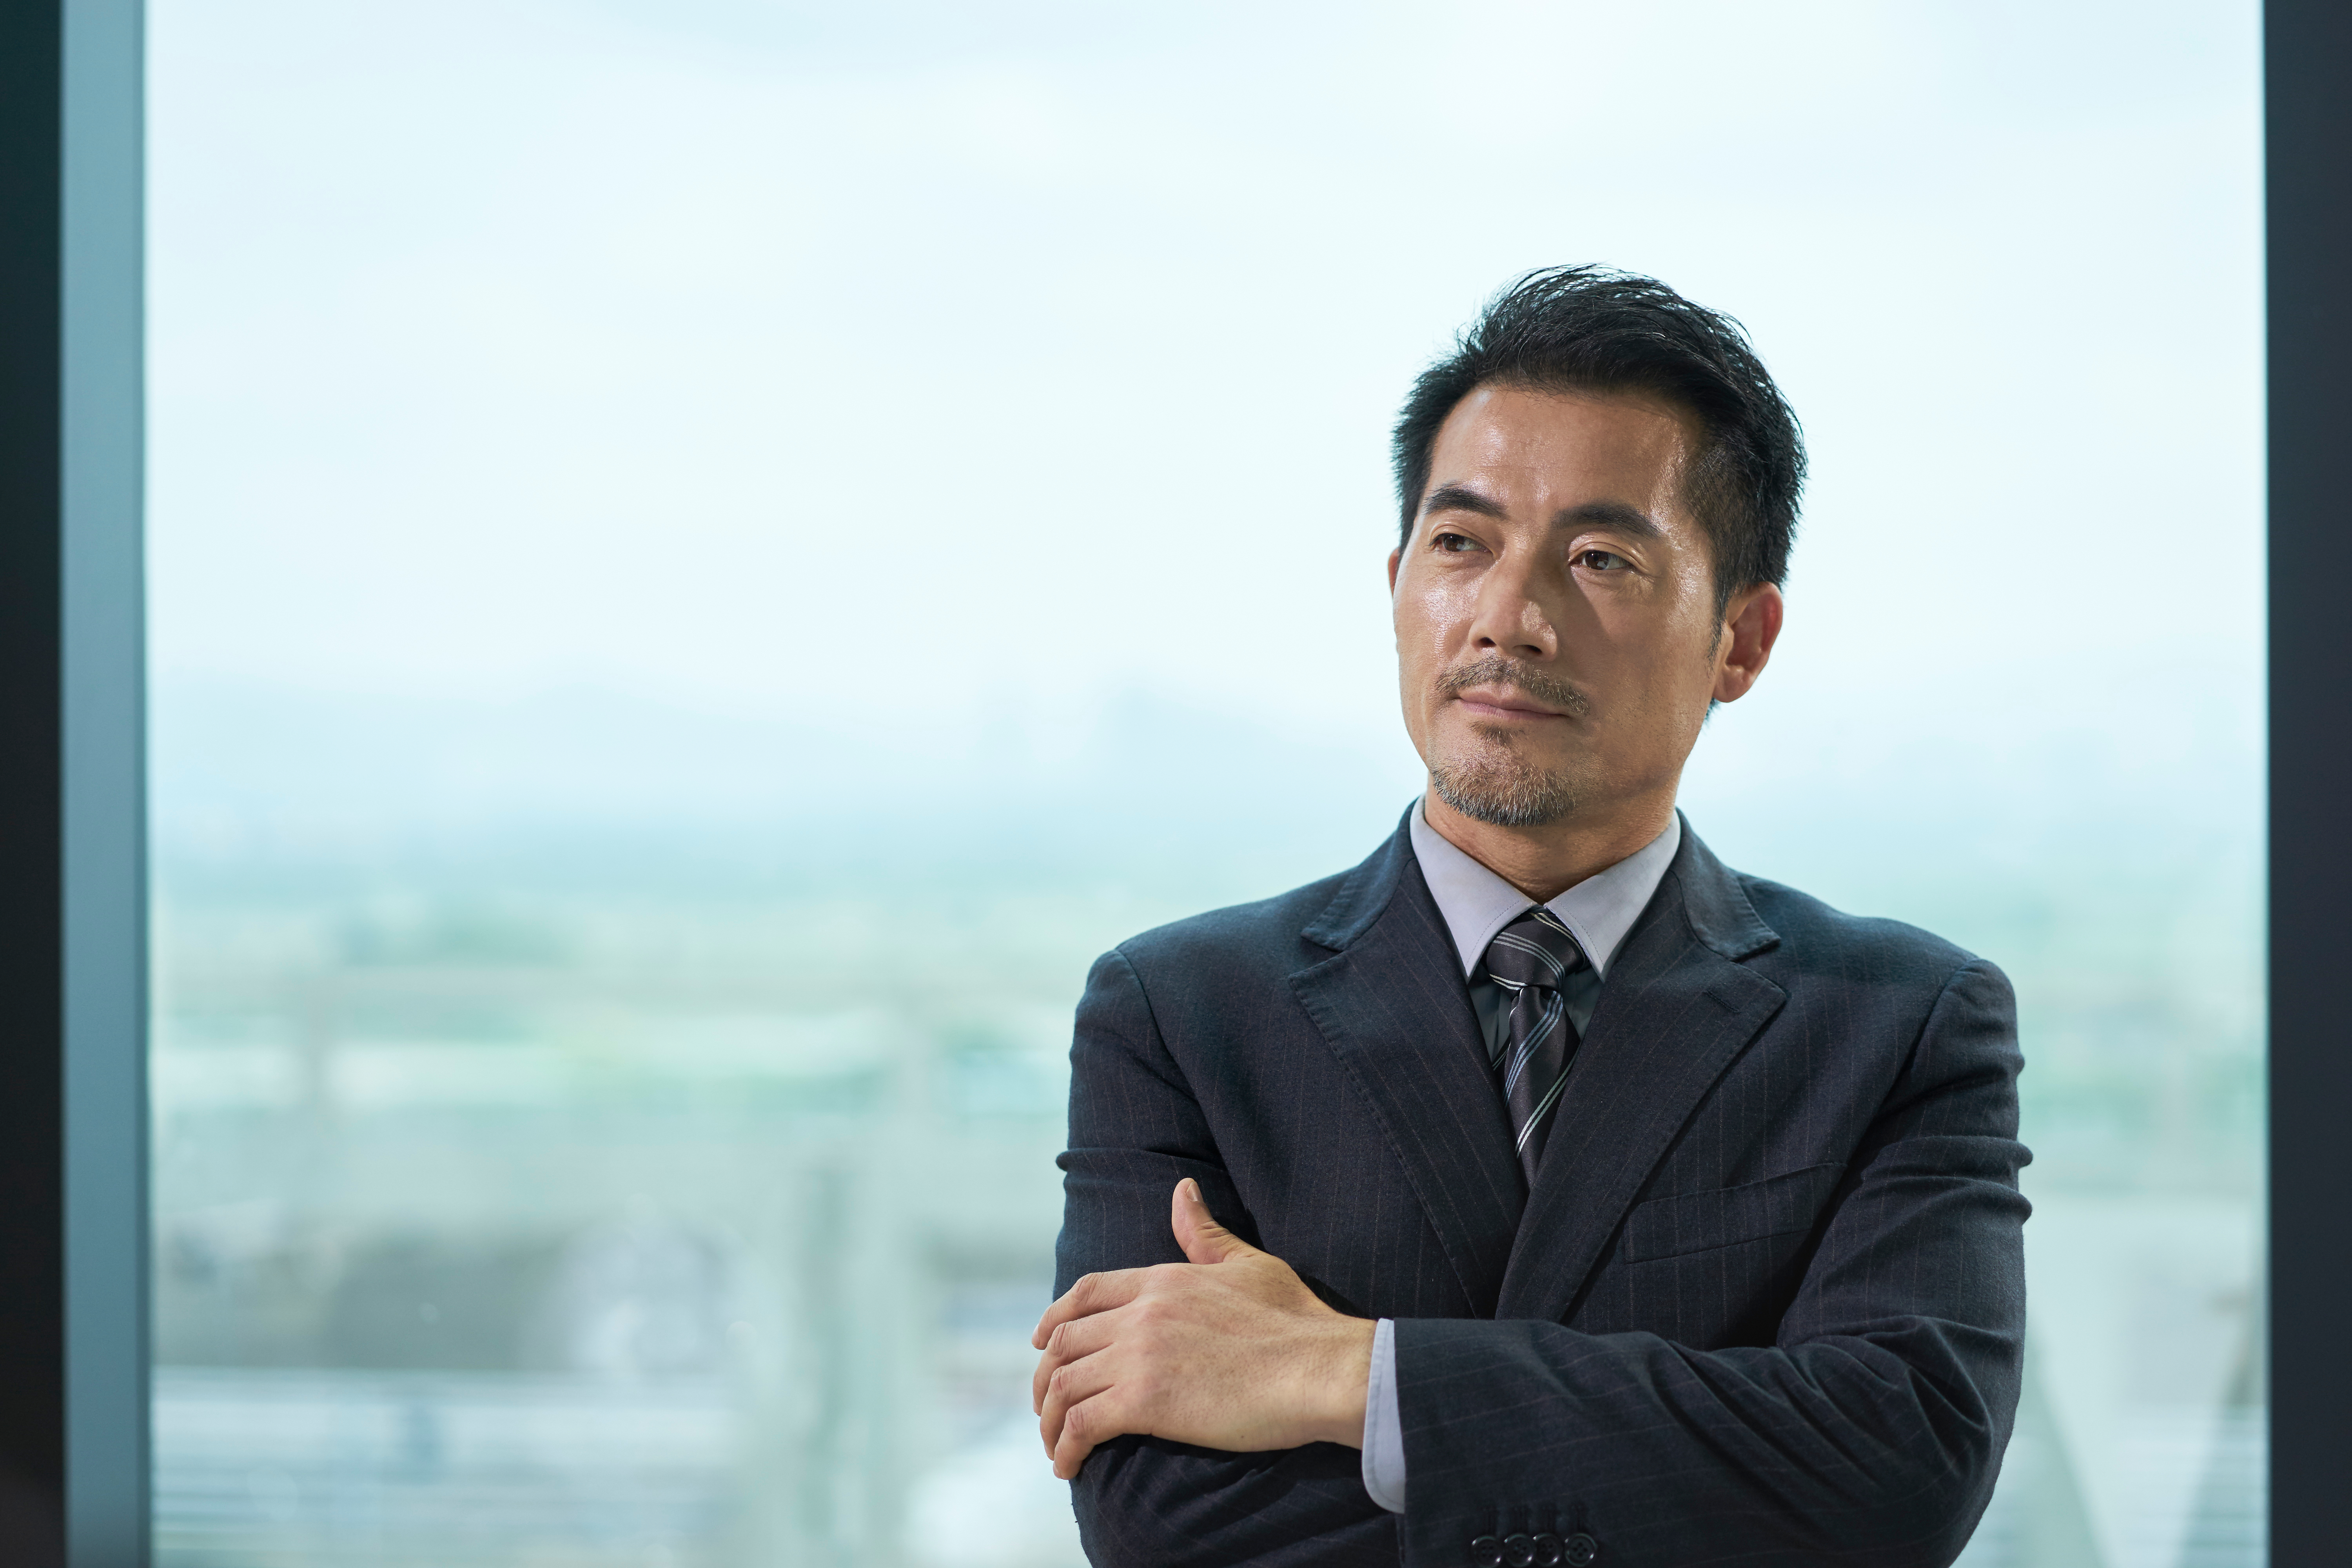 Korean businessman standing in his office | Source: Shutterstock